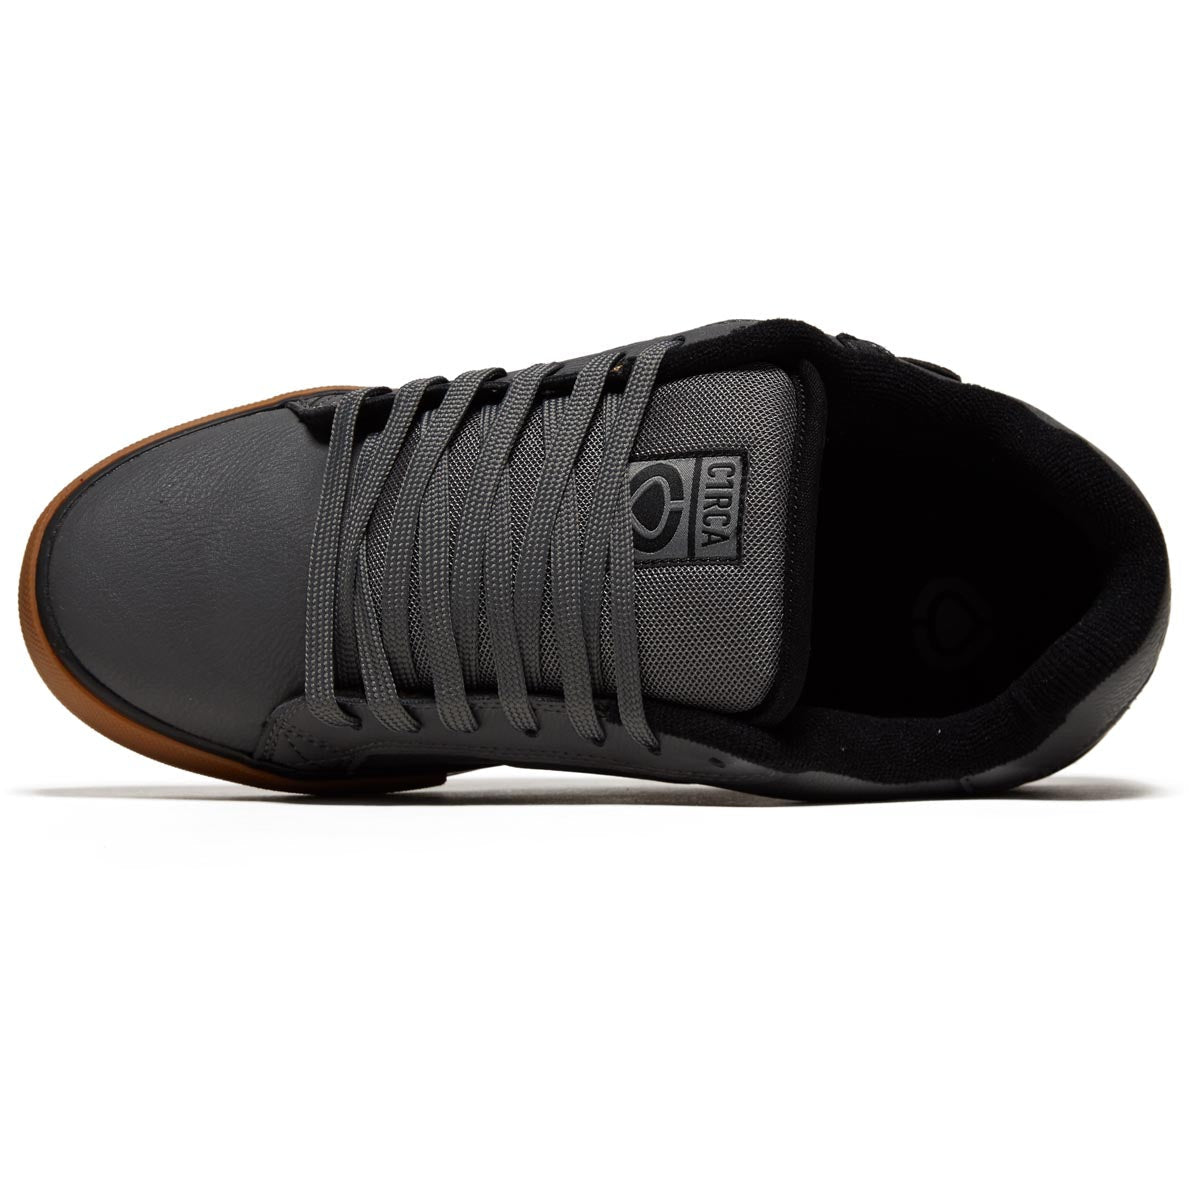 C1rca 211 Vulc Bold Shoes - Grey/Black/Gum image 3